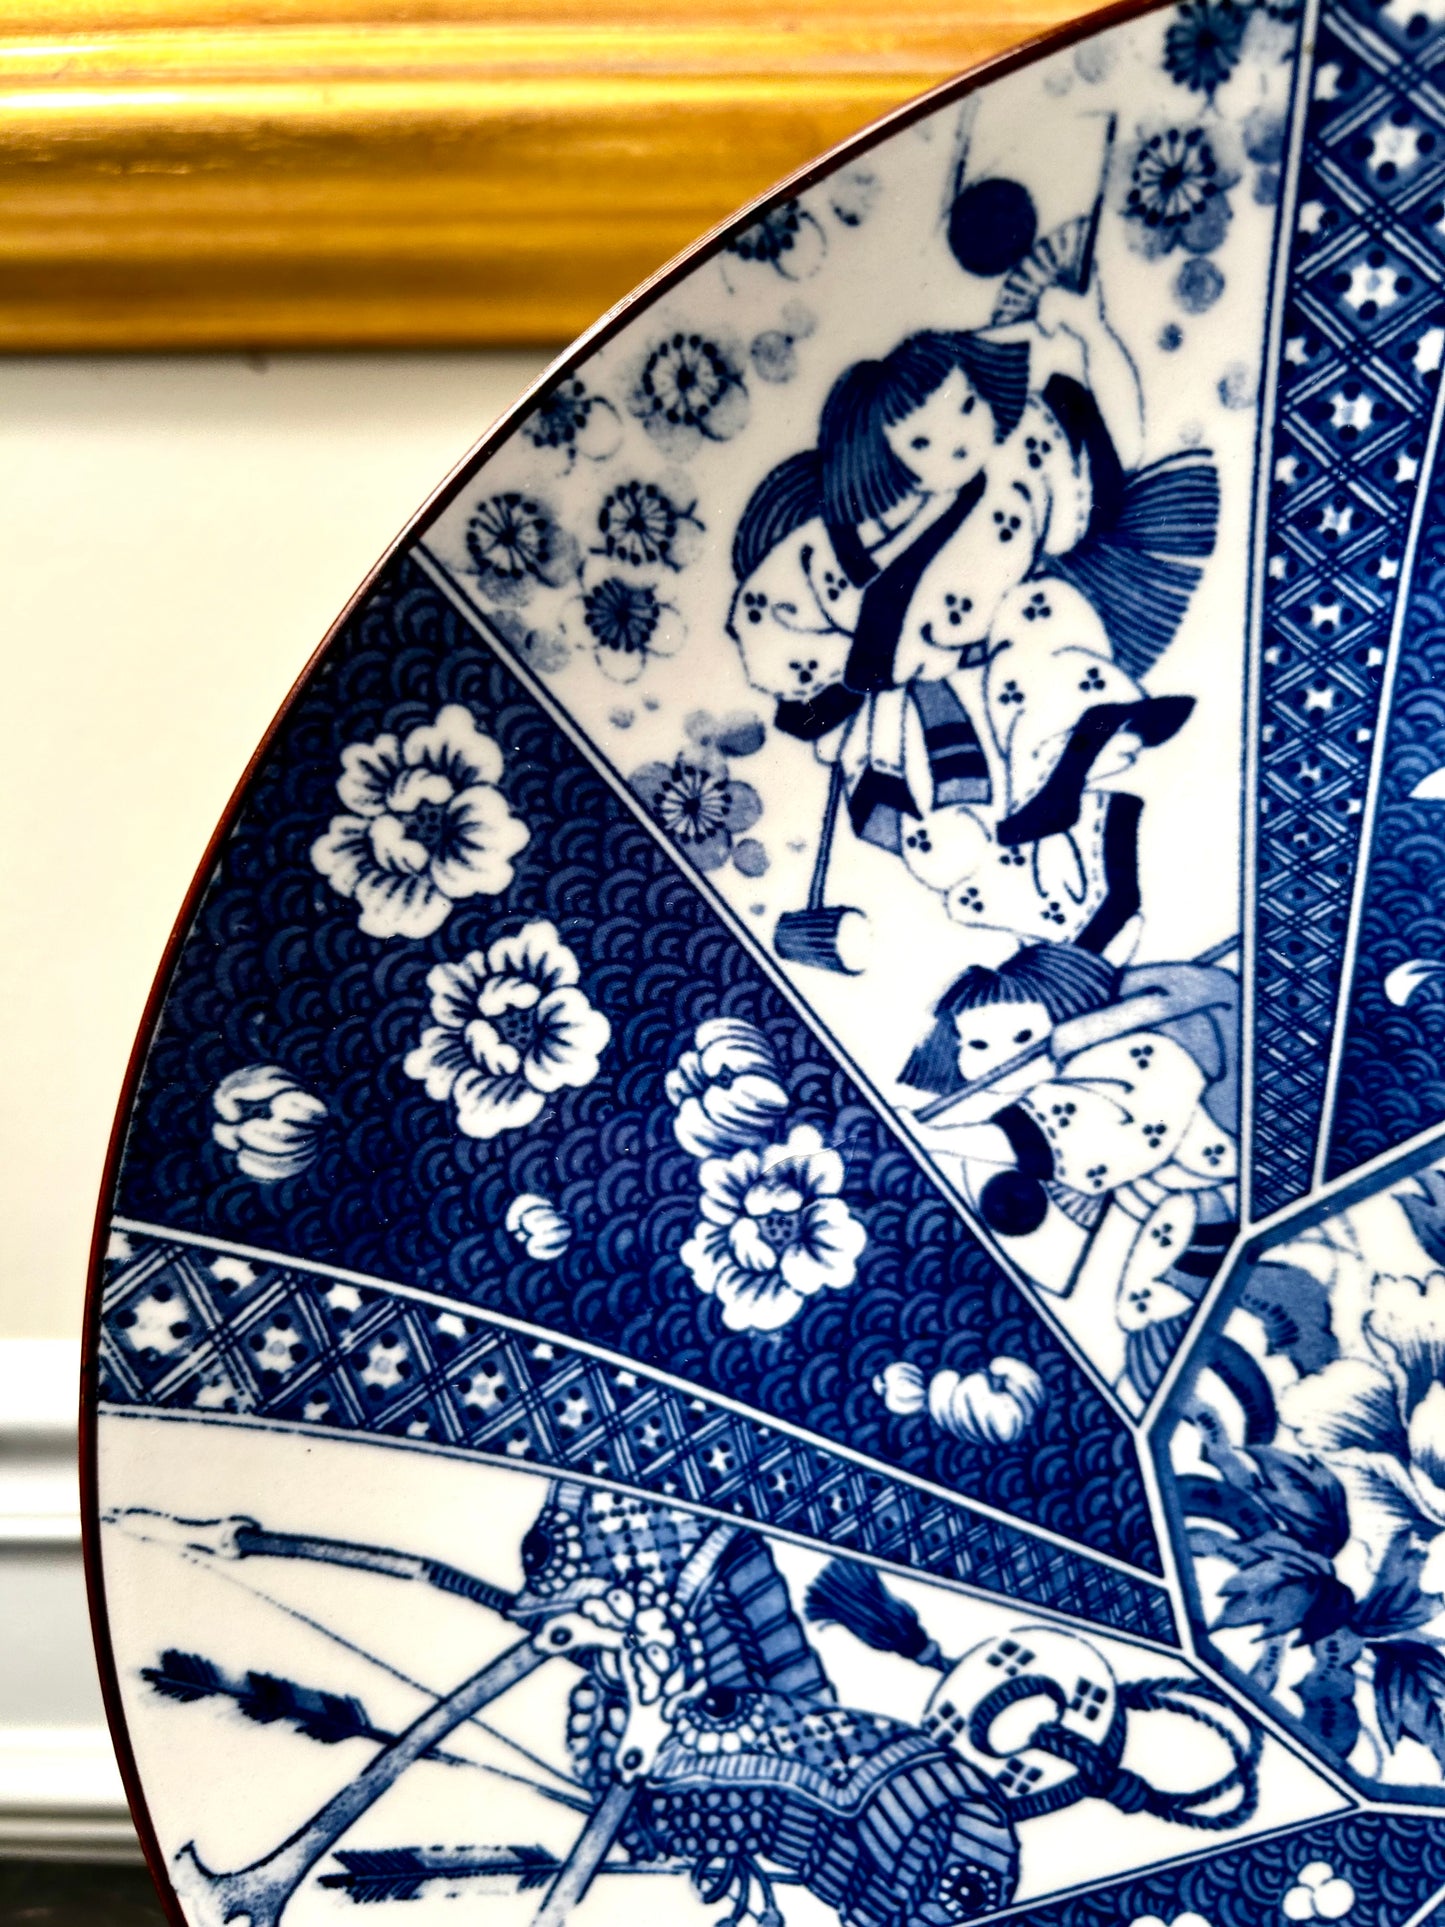 Striking cobalt blue and white chinoiserie round platter